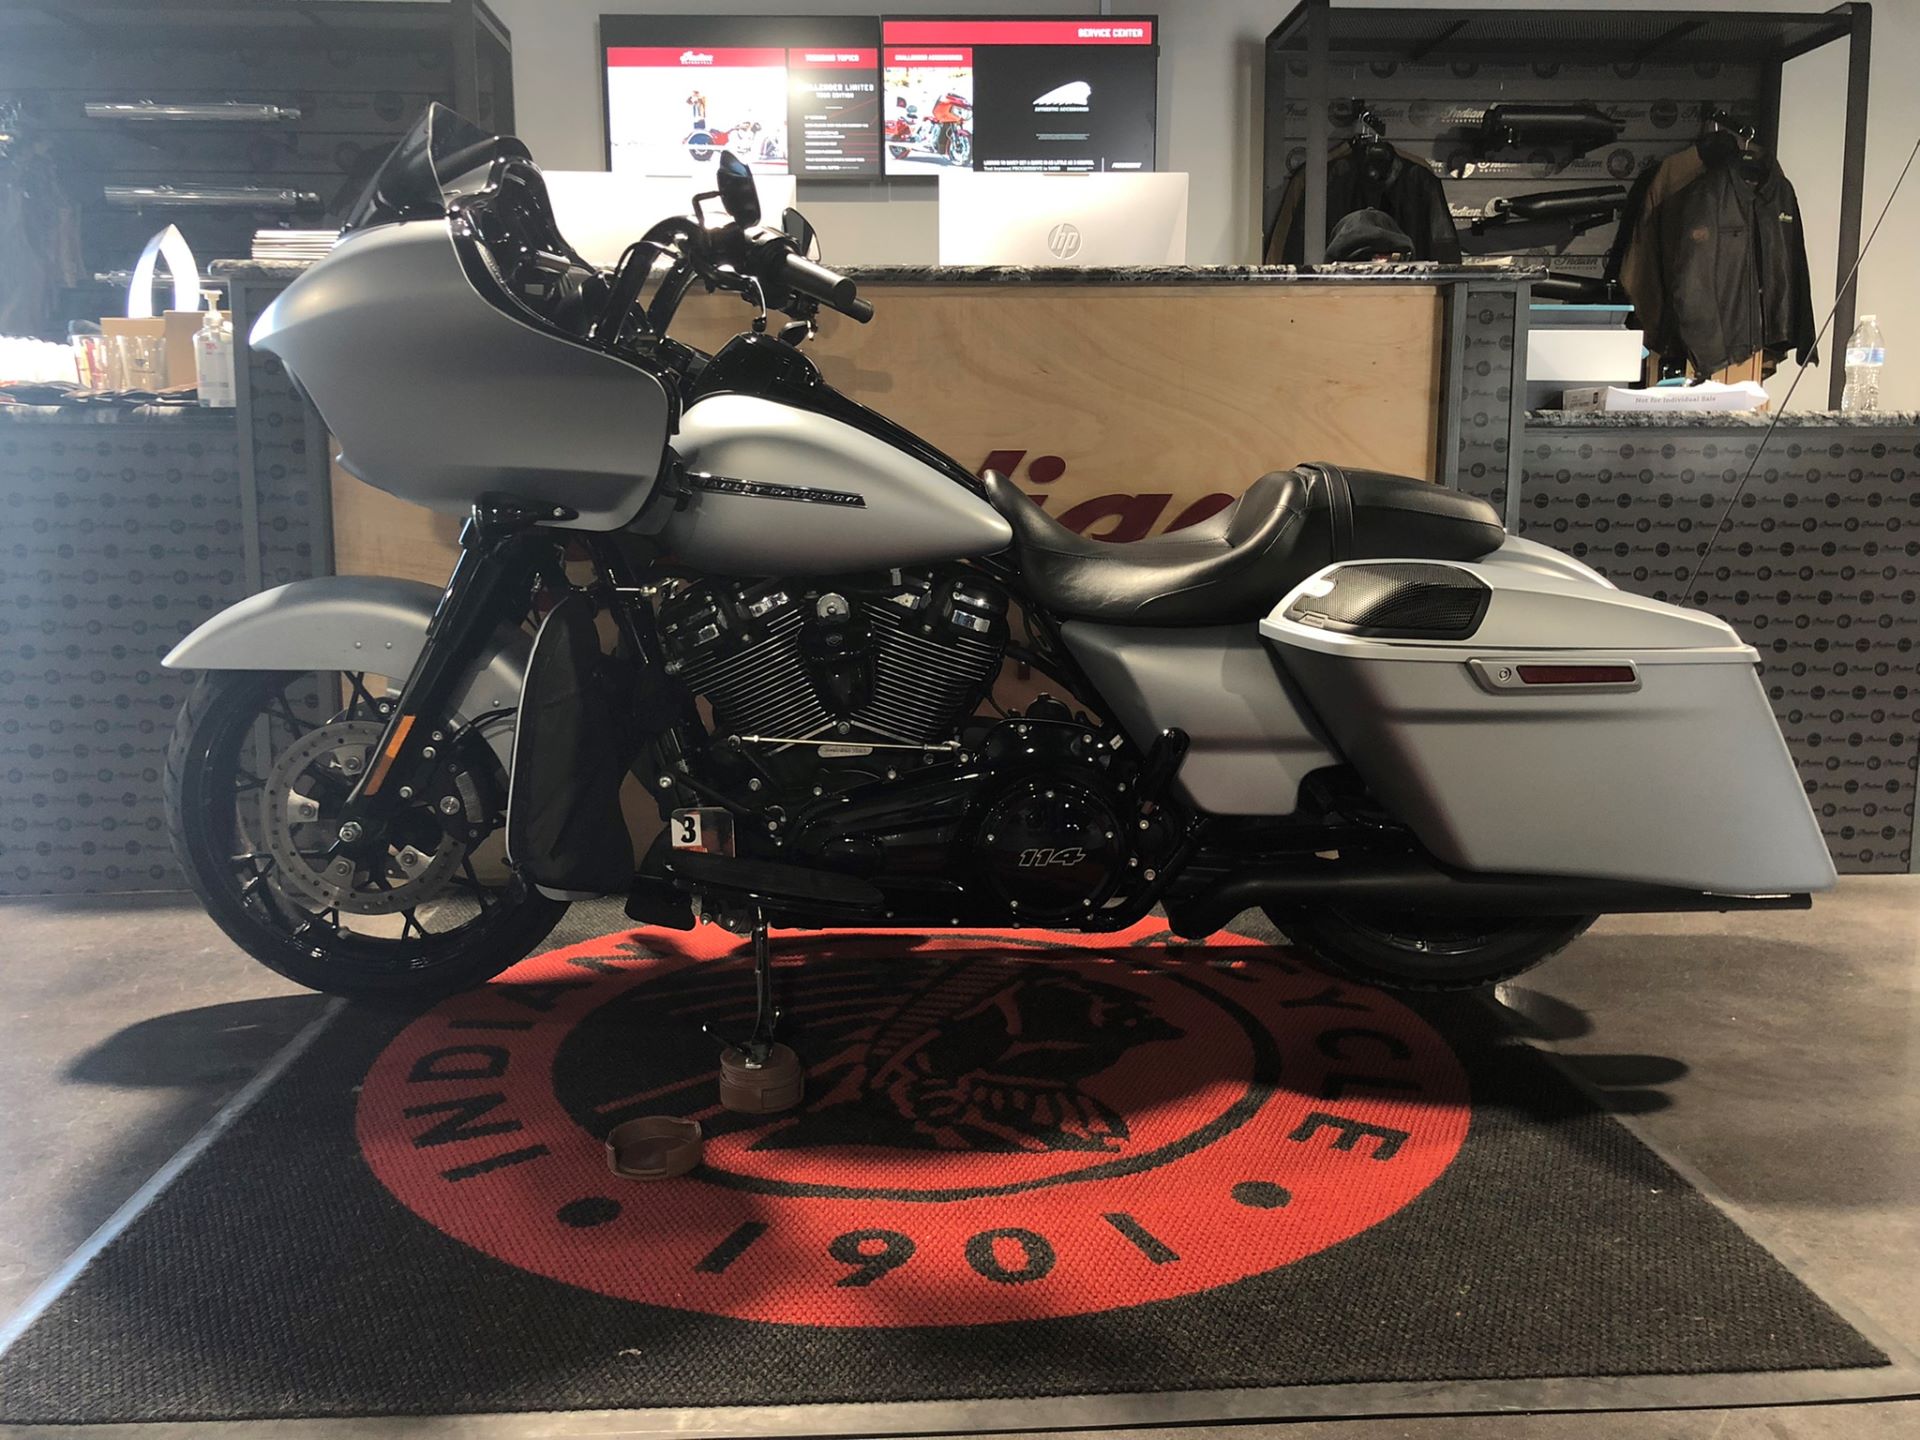 2020 Harley-Davidson Road Glide® Special in Seaford, Delaware - Photo 1